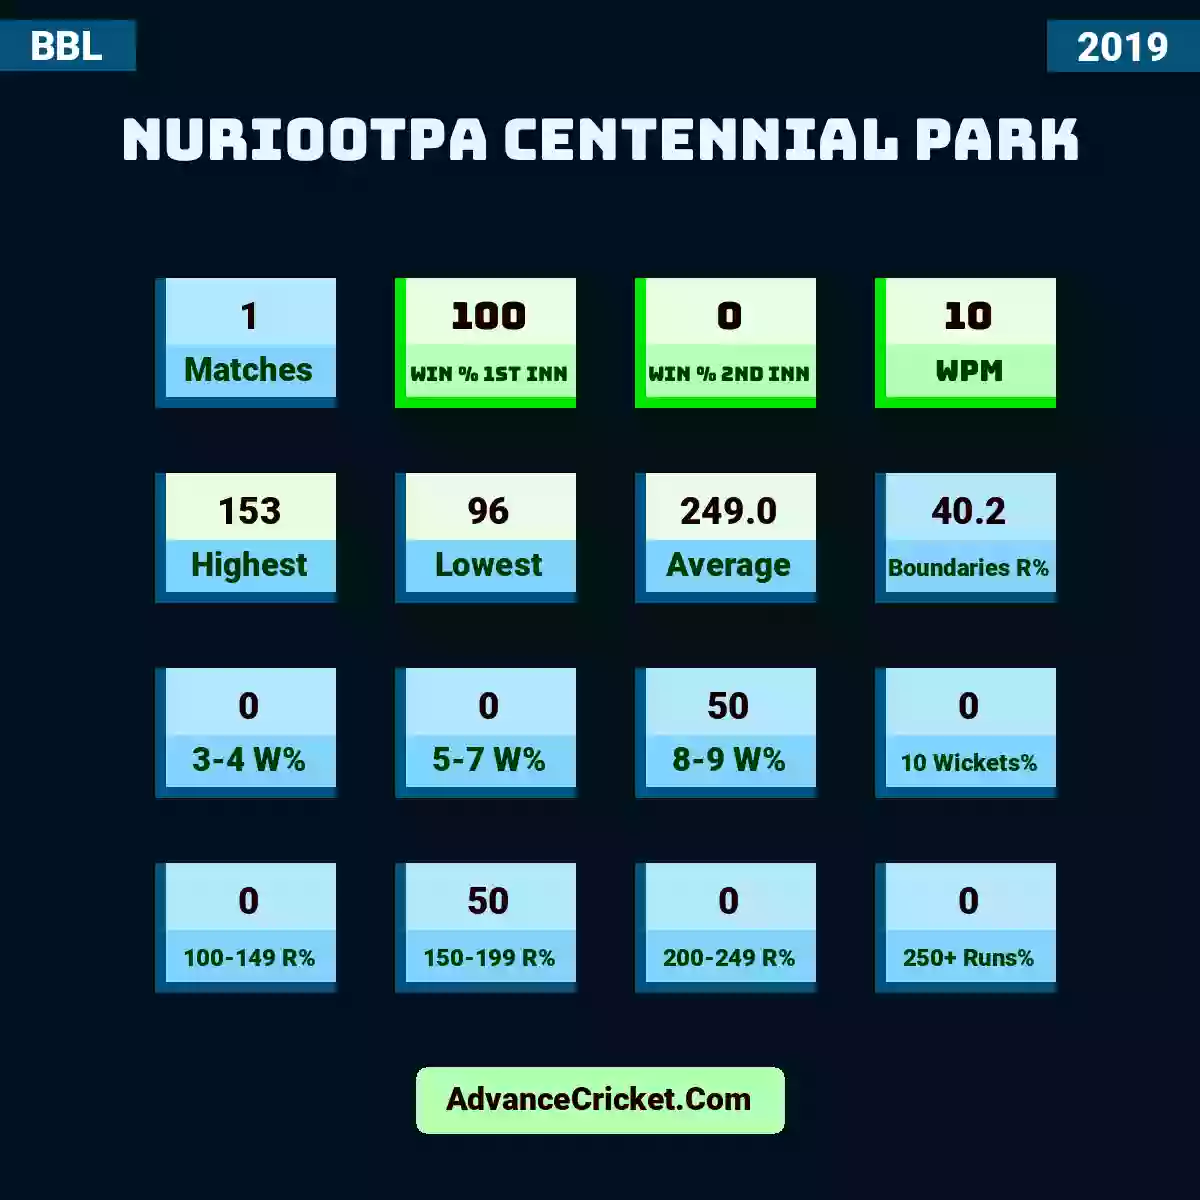 Image showing Nuriootpa Centennial Park with Matches: 1, Win % 1st Inn: 100, Win % 2nd Inn: 0, WPM: 10, Highest: 153, Lowest: 96, Average: 249.0, Boundaries R%: 40.2, 3-4 W%: 0, 5-7 W%: 0, 8-9 W%: 50, 10 Wickets%: 0, 100-149 R%: 0, 150-199 R%: 50, 200-249 R%: 0, 250+ Runs%: 0.